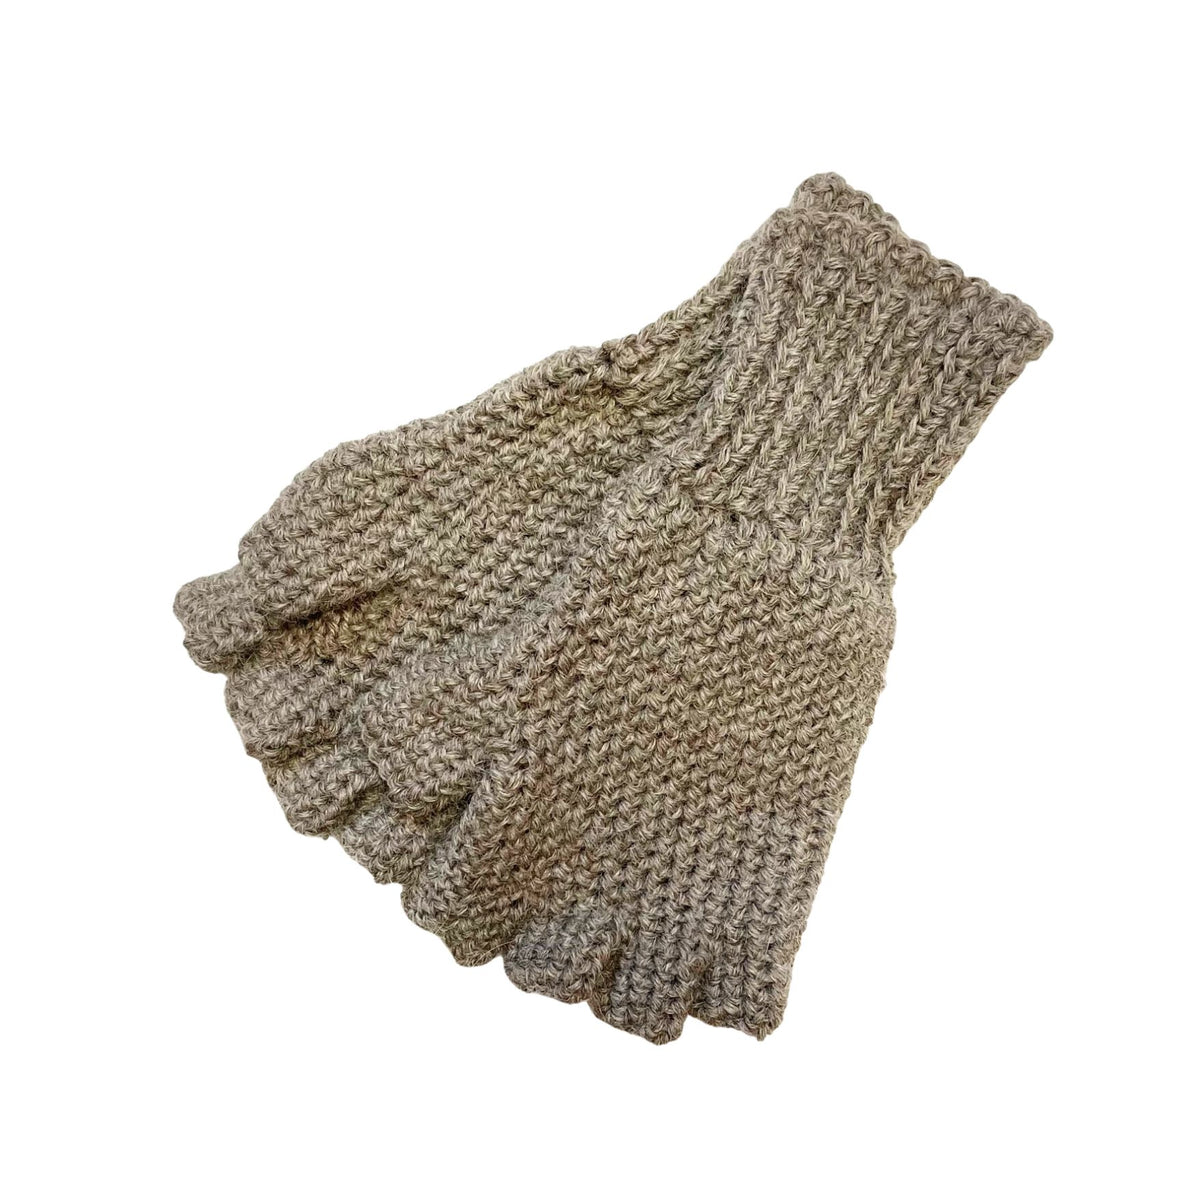 Fingerless Alpaca Gloves - Men & Women - Versatile & Warm